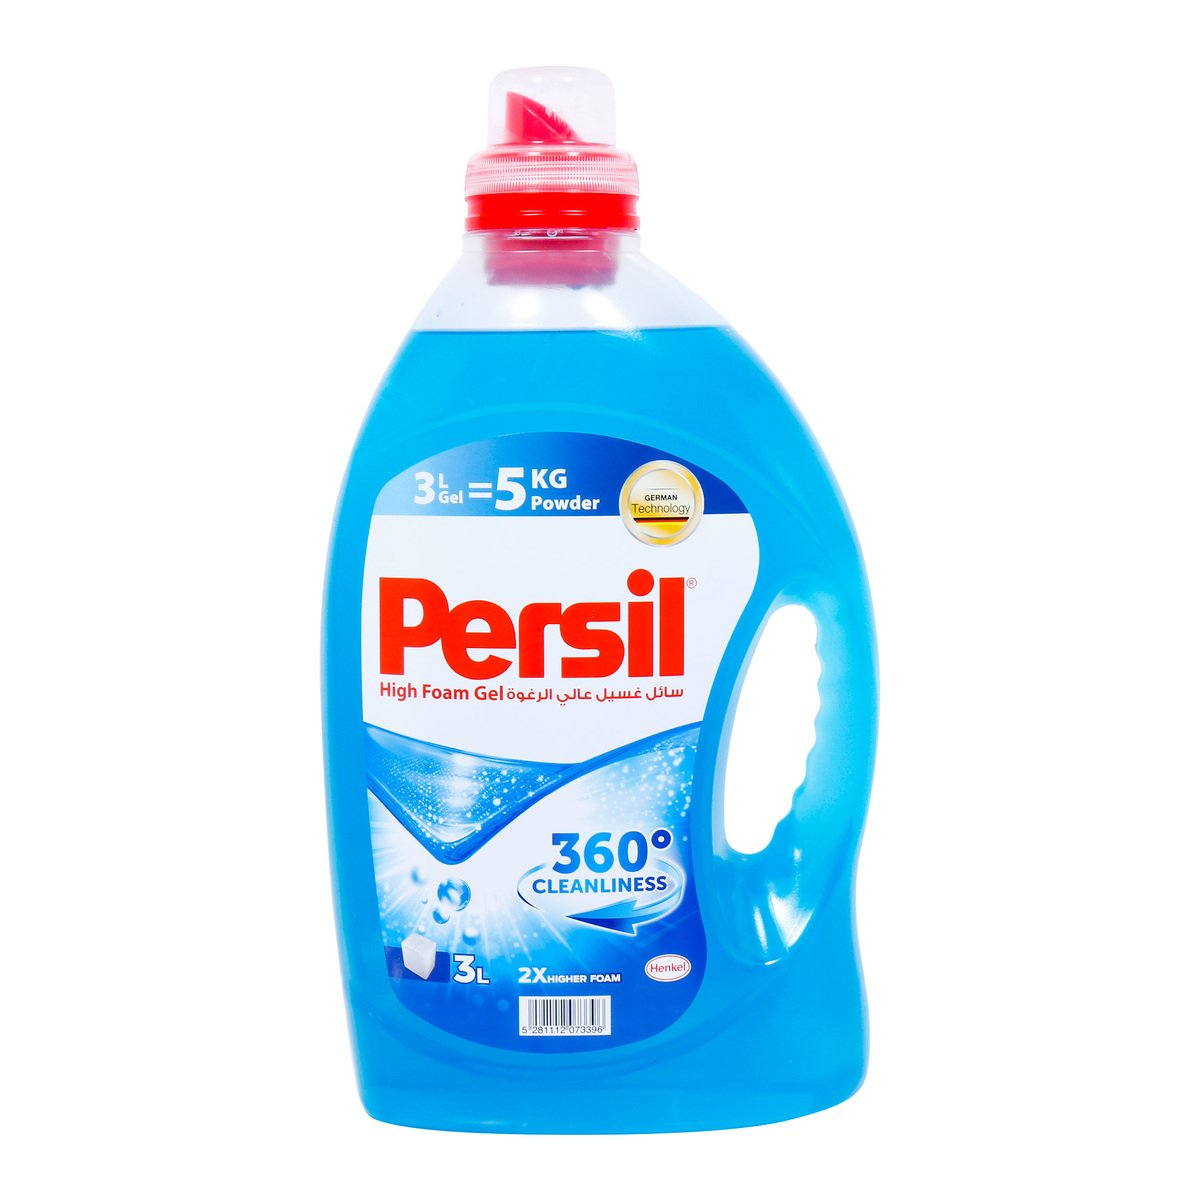 Persil Detergent Gel High Foam Top Load 3Litre